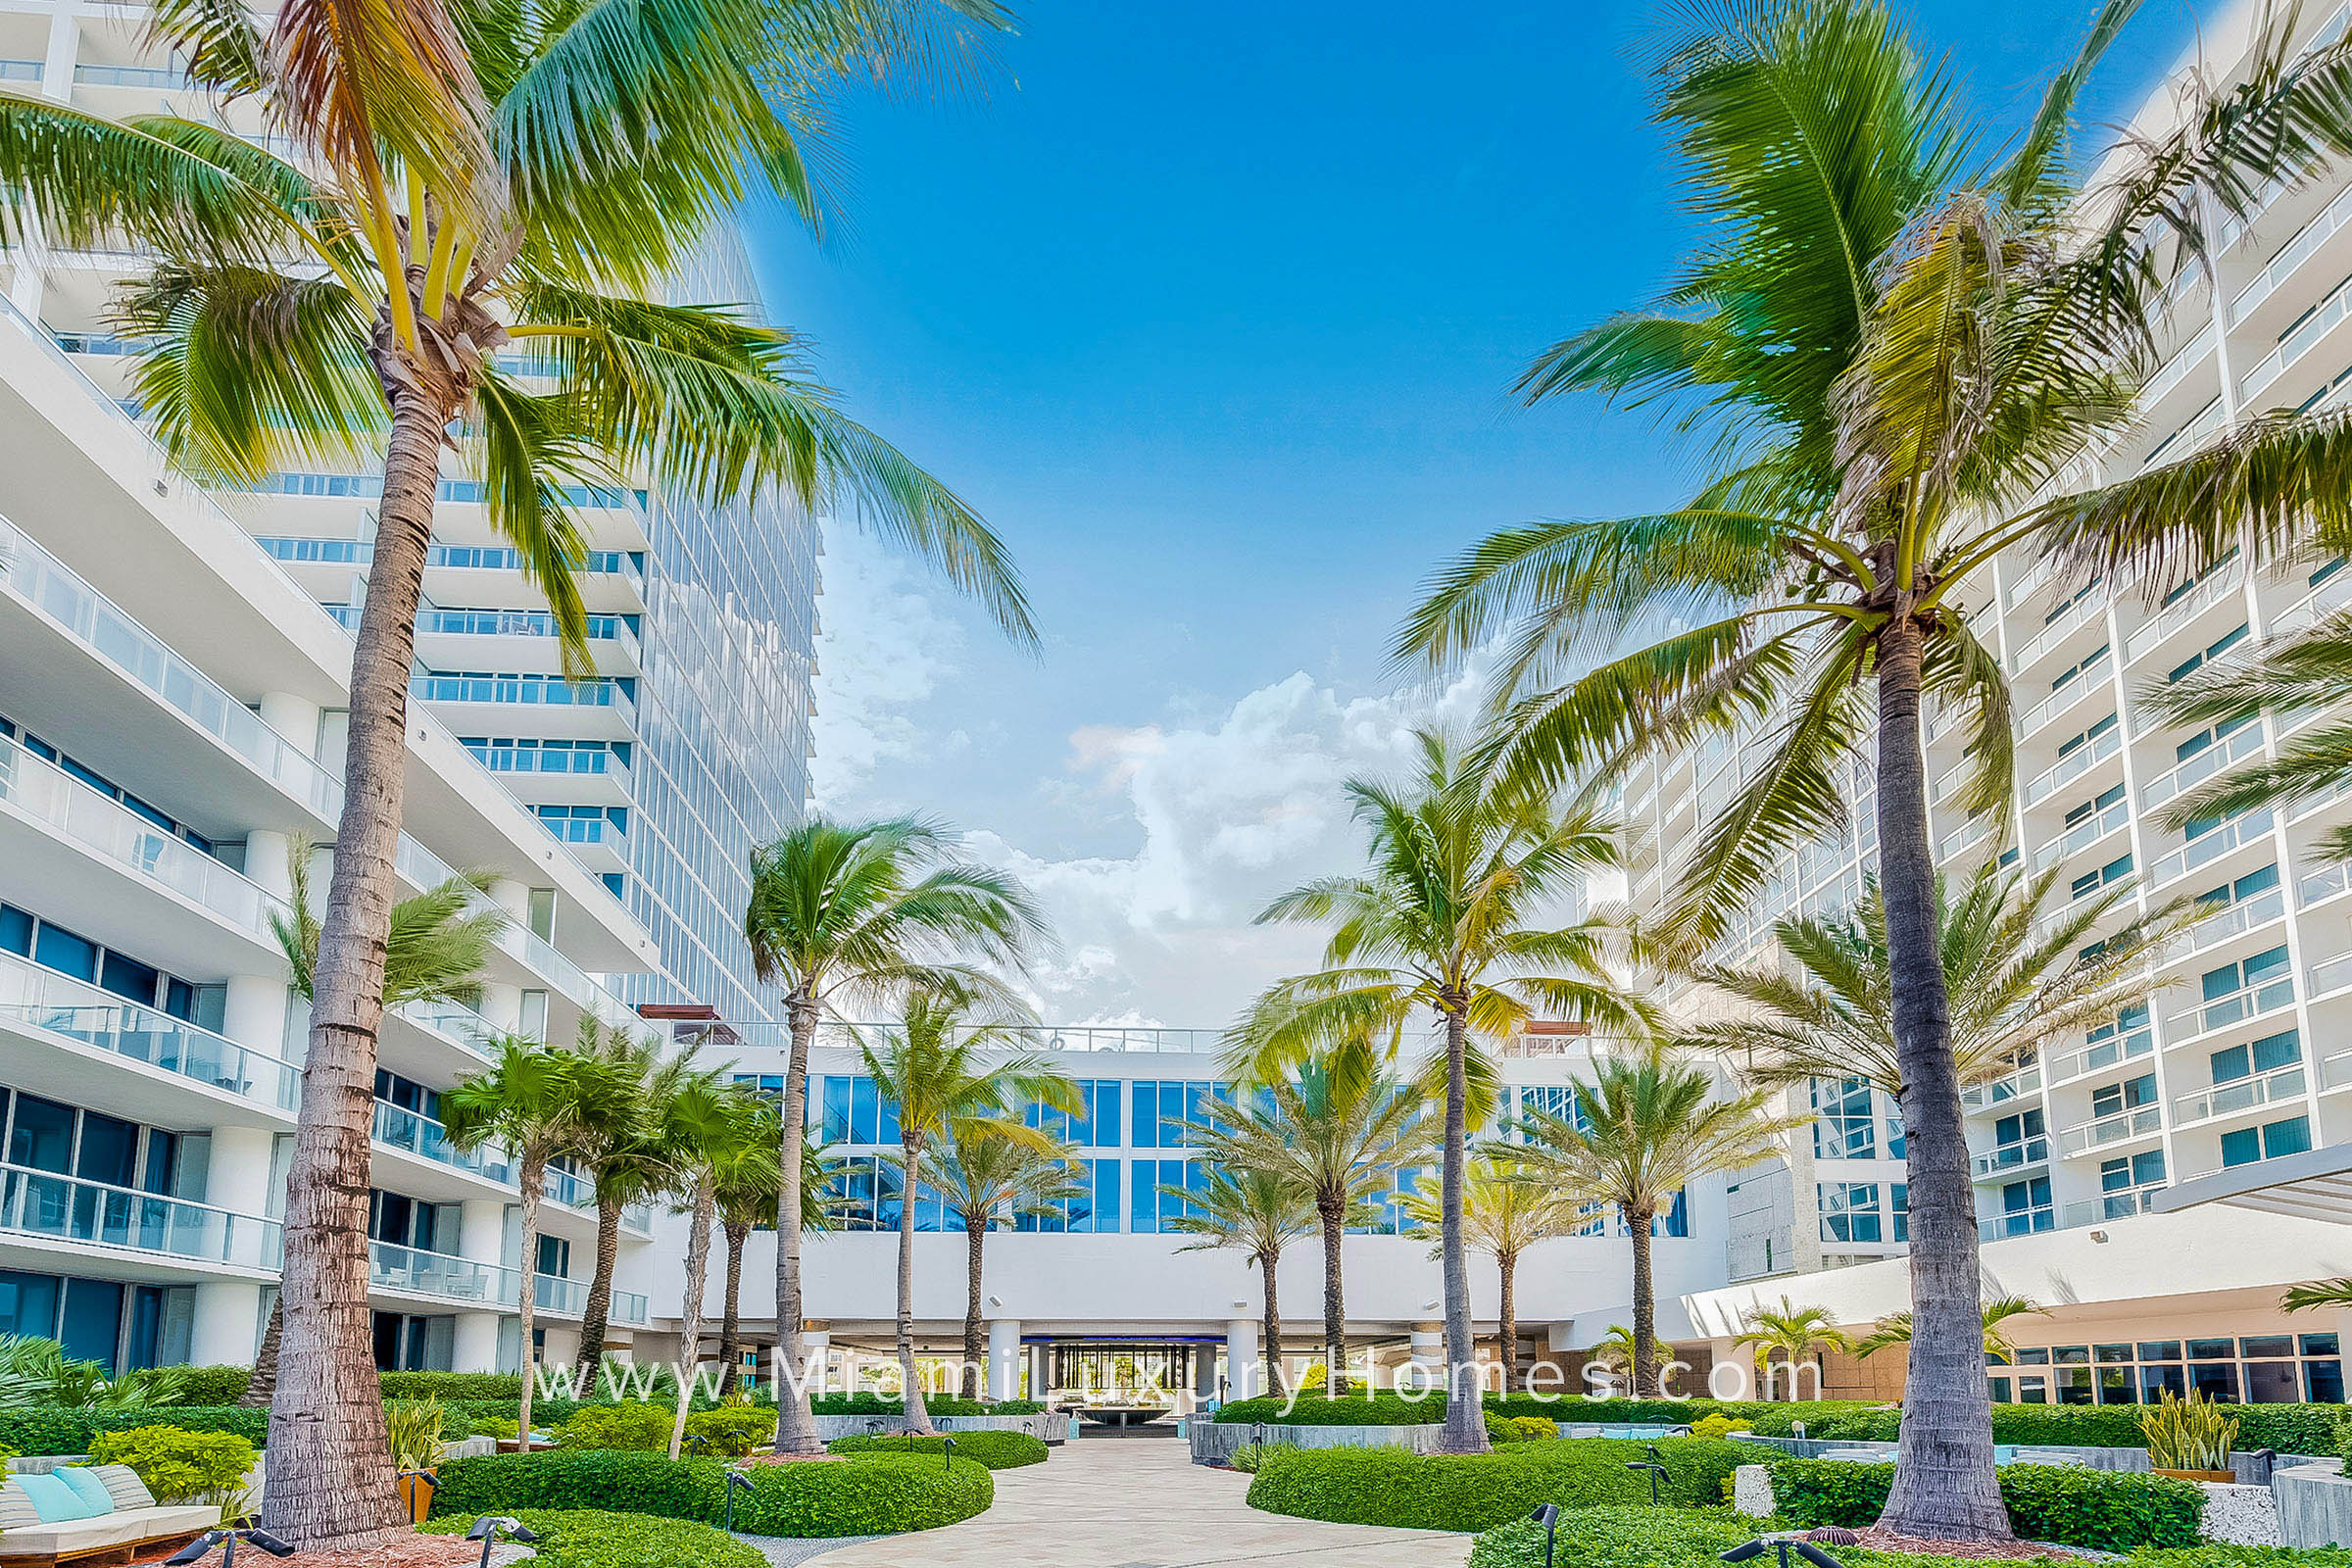 The Carillon Miami Beach Grounds